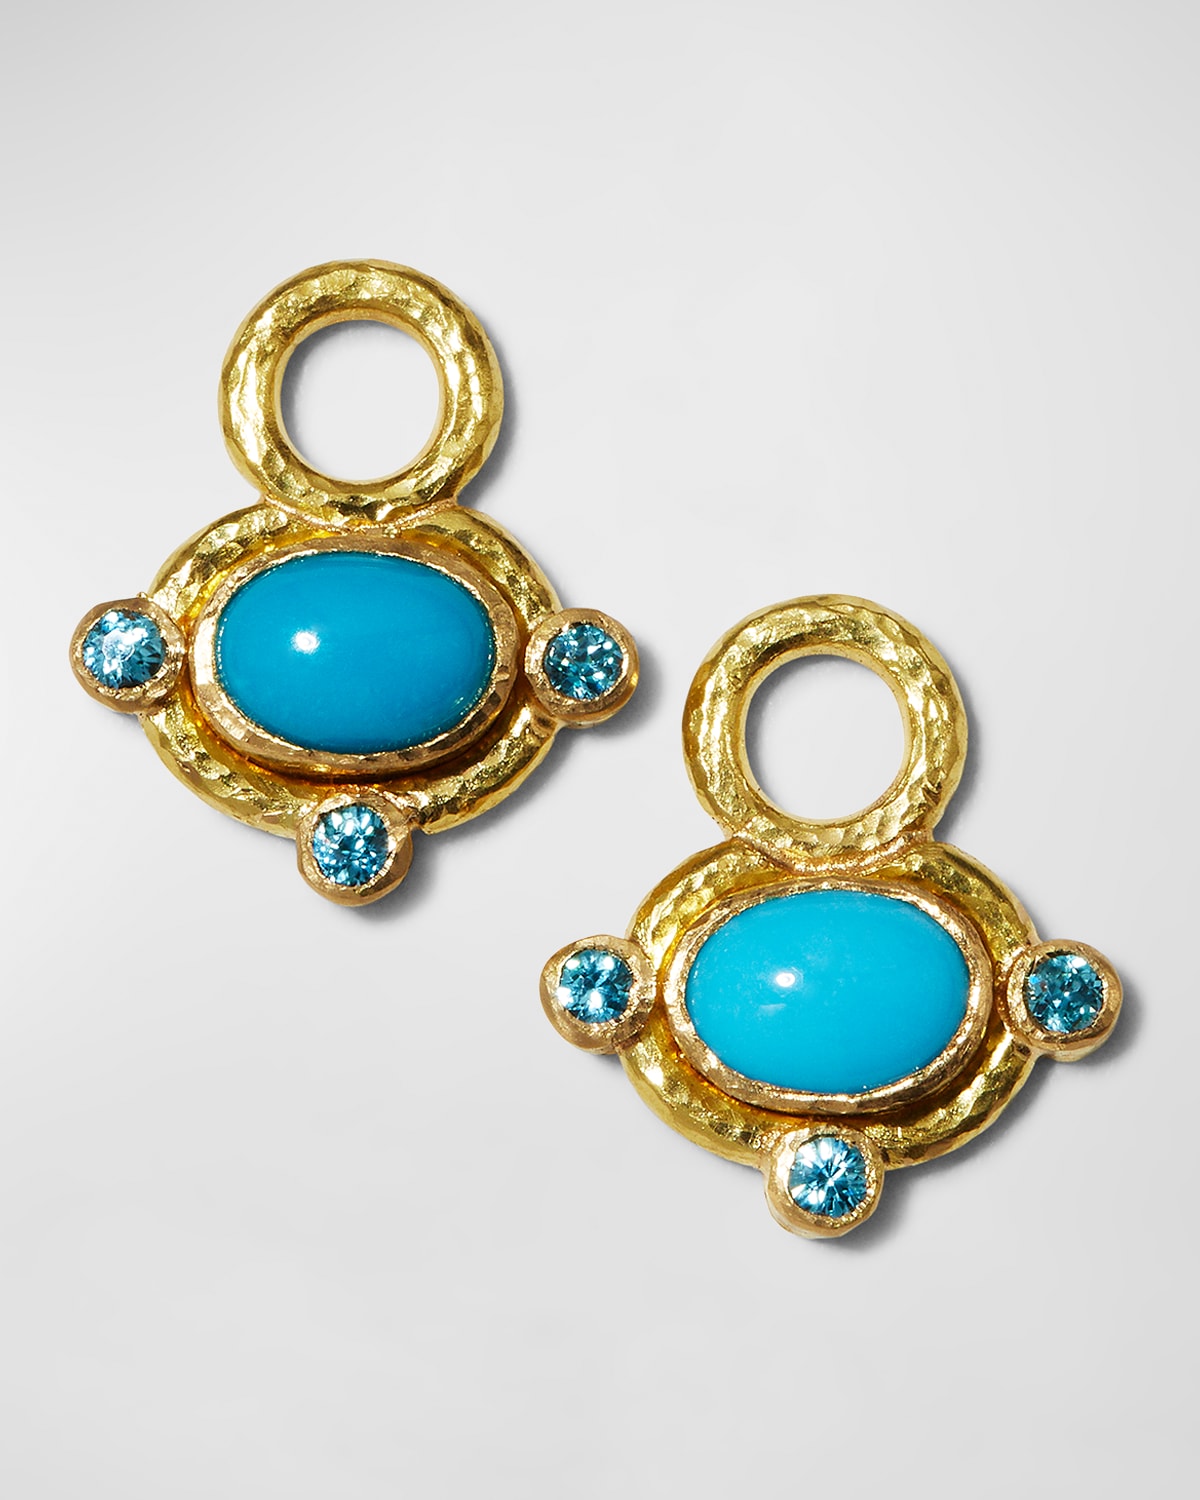 19k Cabochon Turquoise Earring Pendants